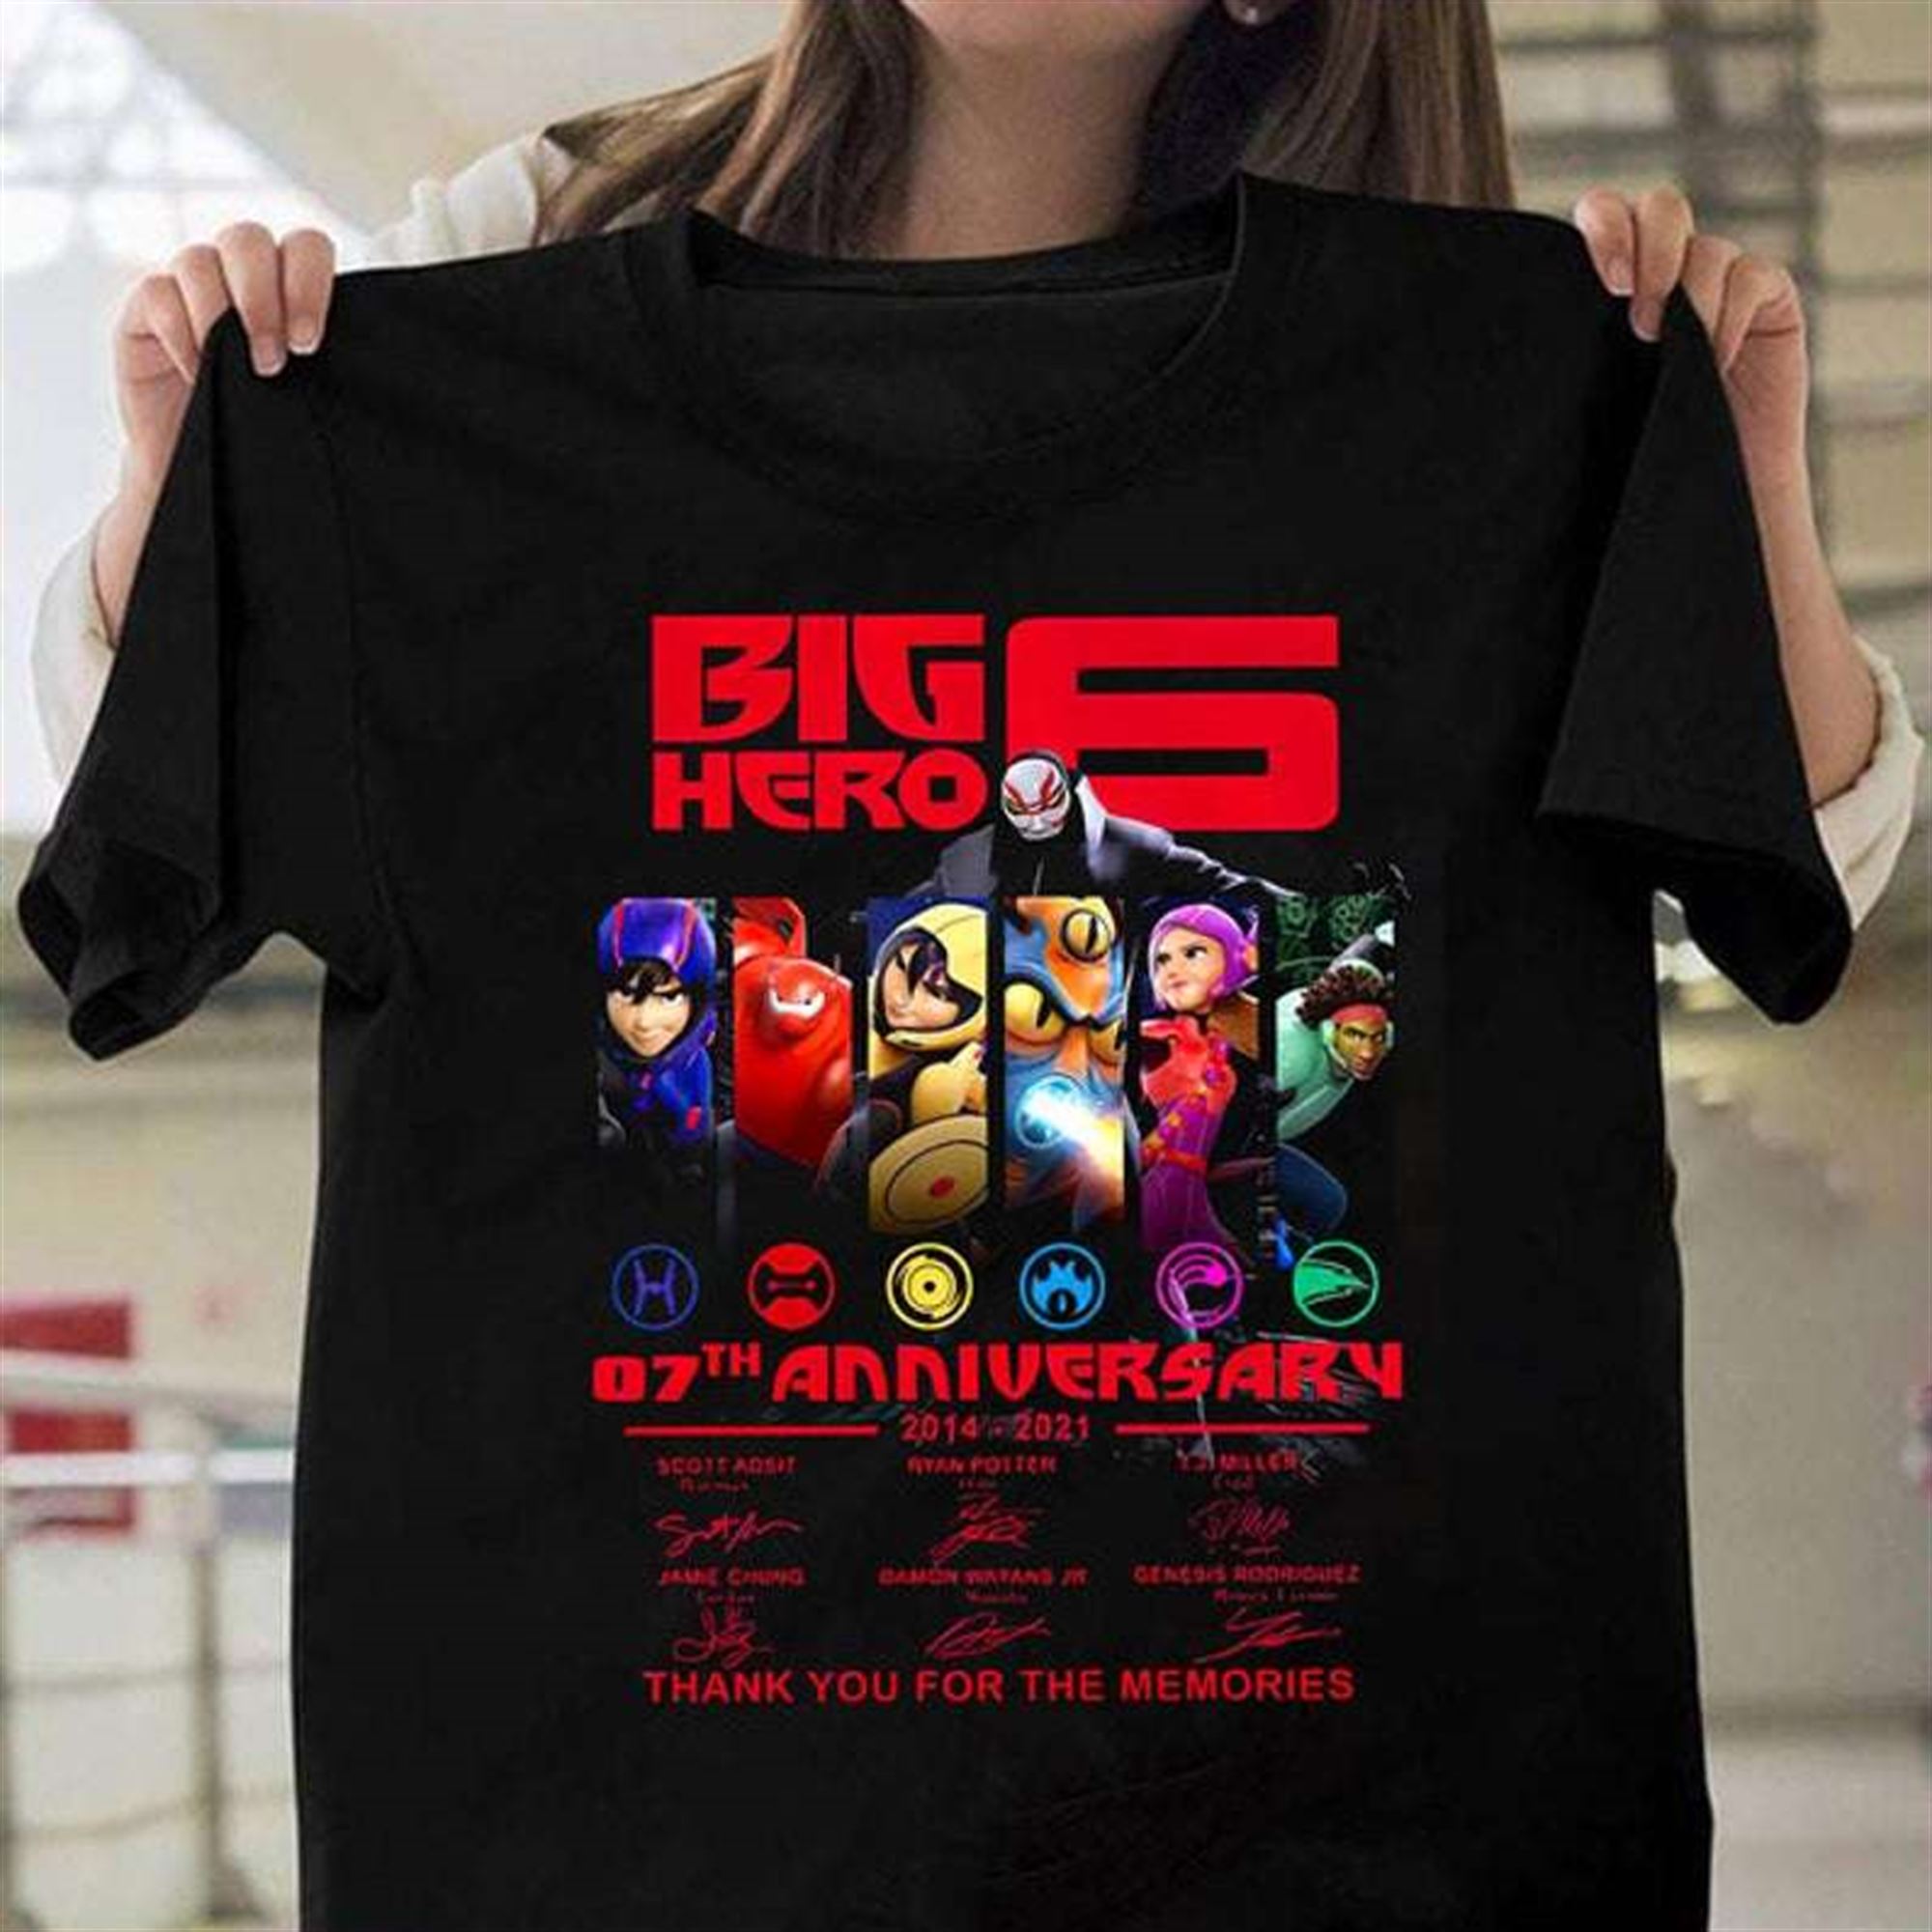 Disney Big Hero 6 Signature T Shirt Plus Size Up To 5x